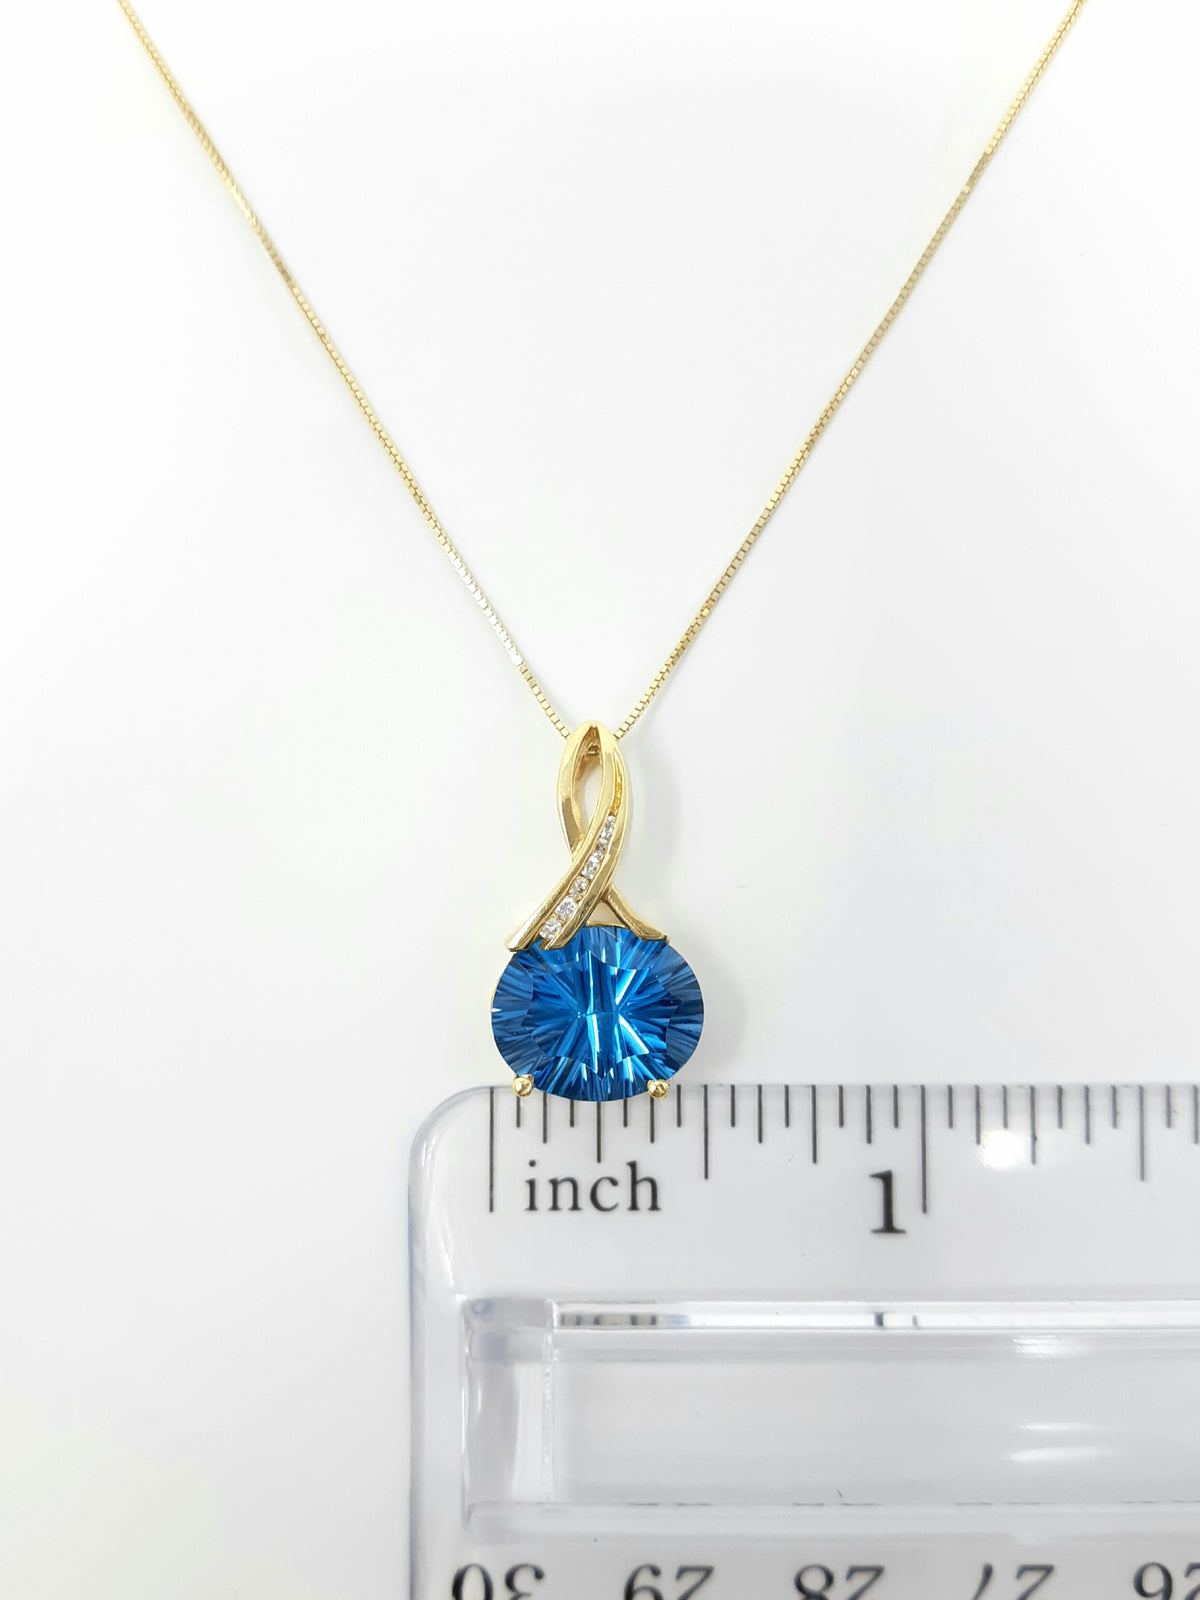 Blue Topaz and Diamond Pendant